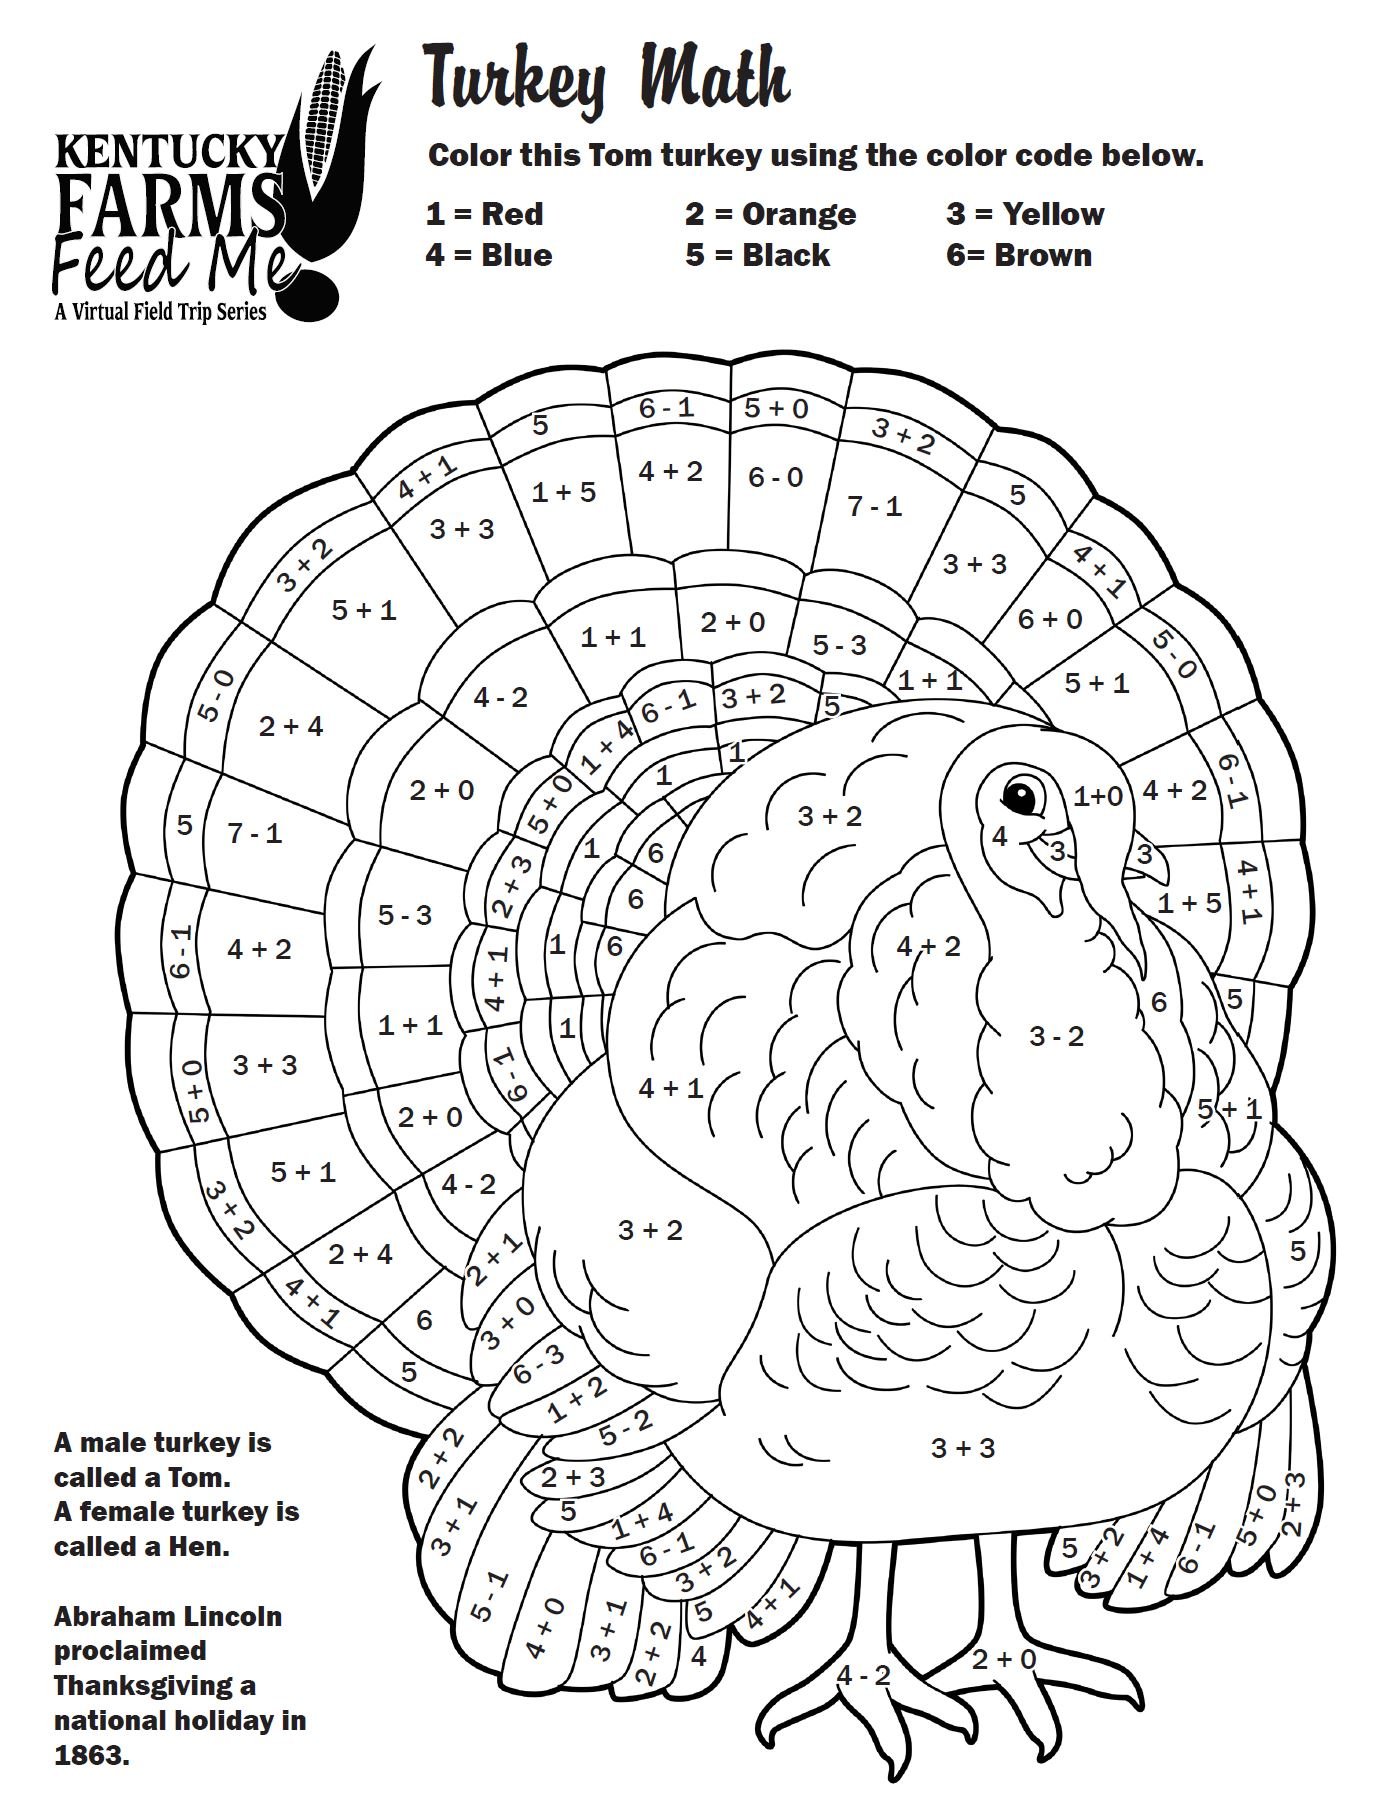 Turkey math coloring sheets â